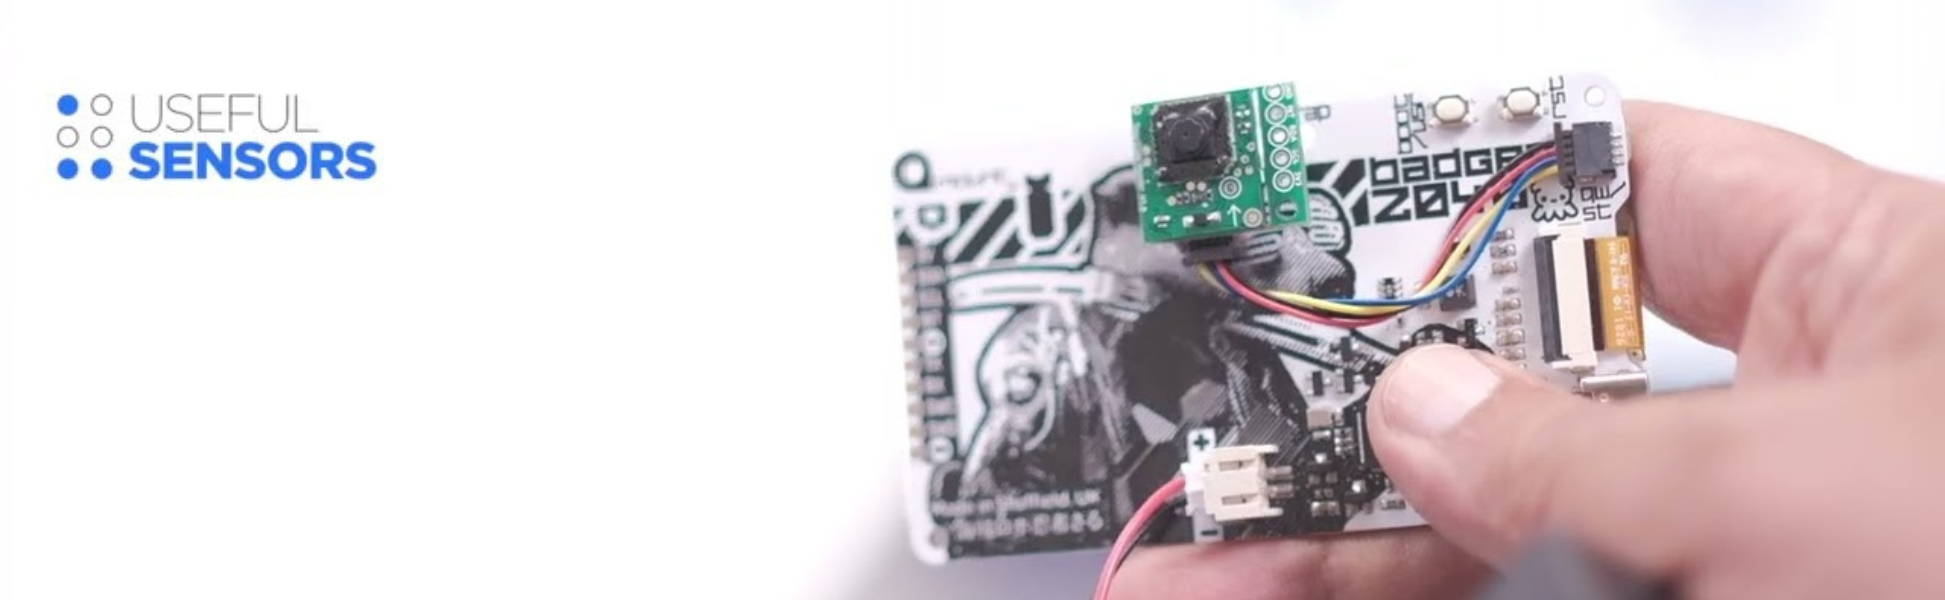 Useful Sensors tiny code reader